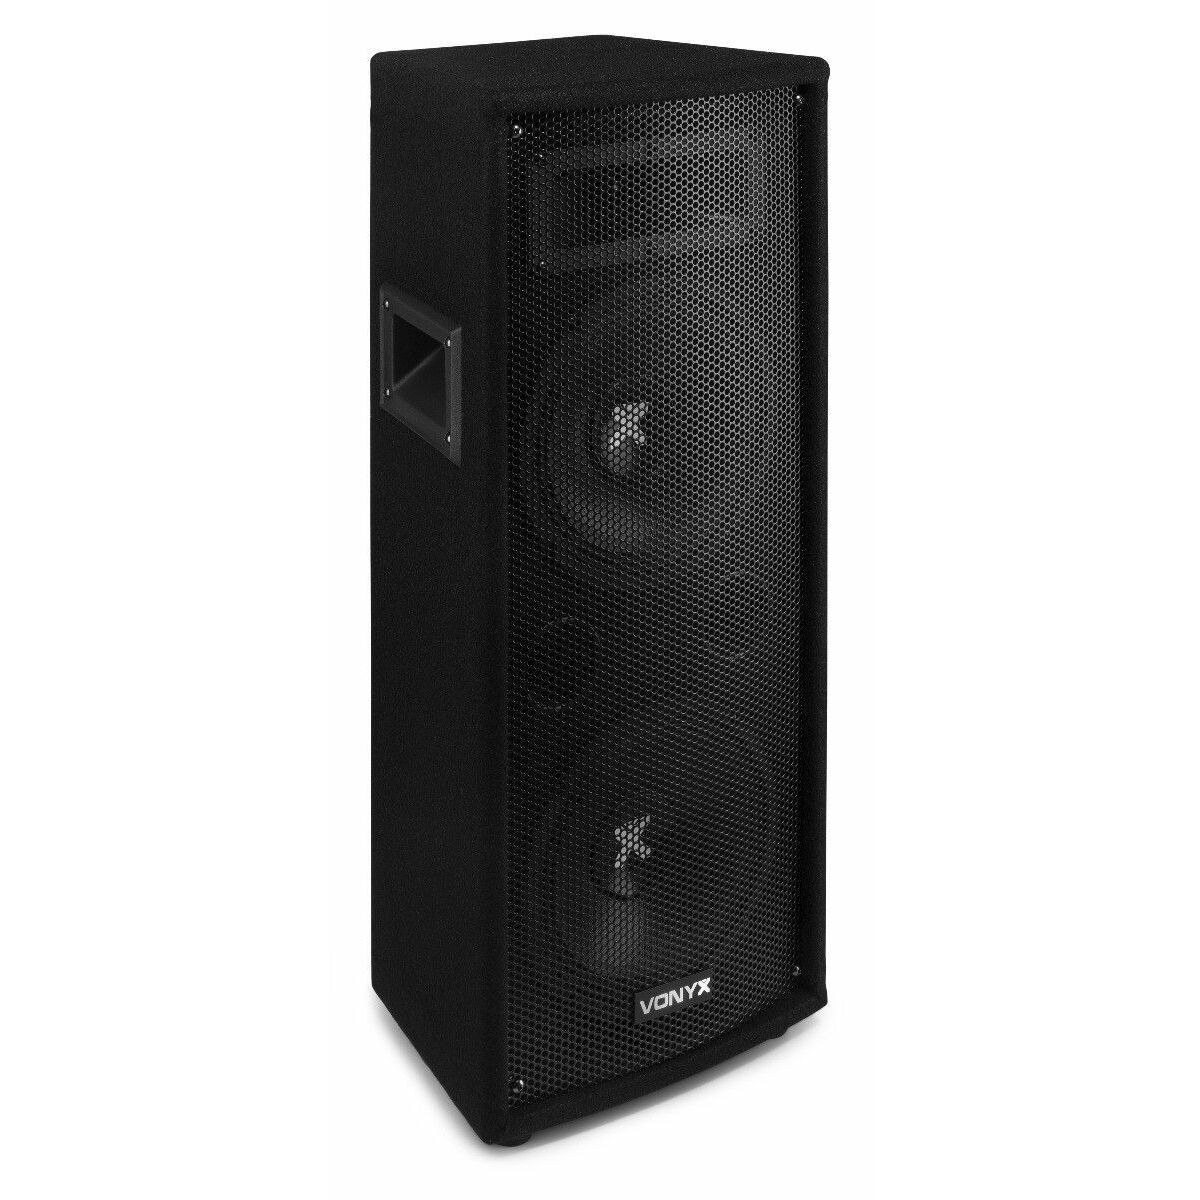 Retourdeal - Vonyx SL28 passieve disco speaker 2x 8" - 800W